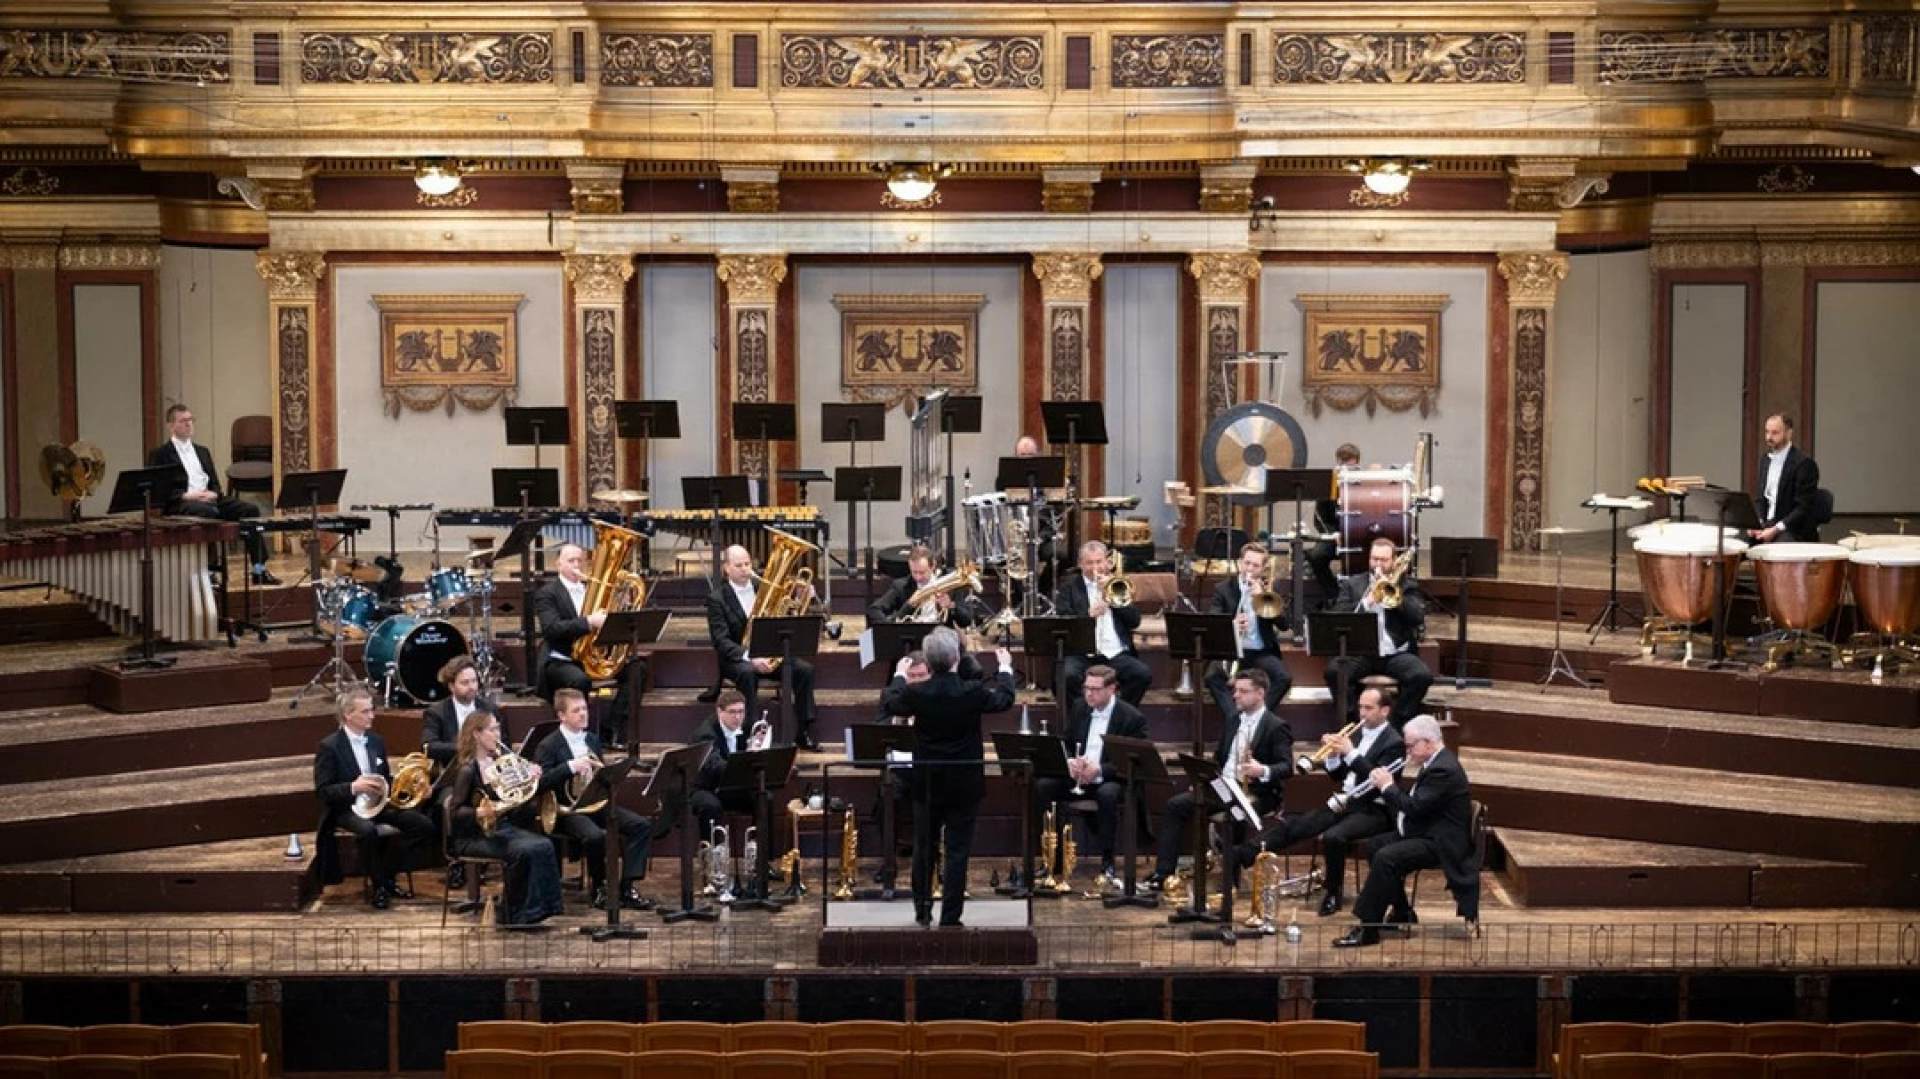 The Philharmonic Brass